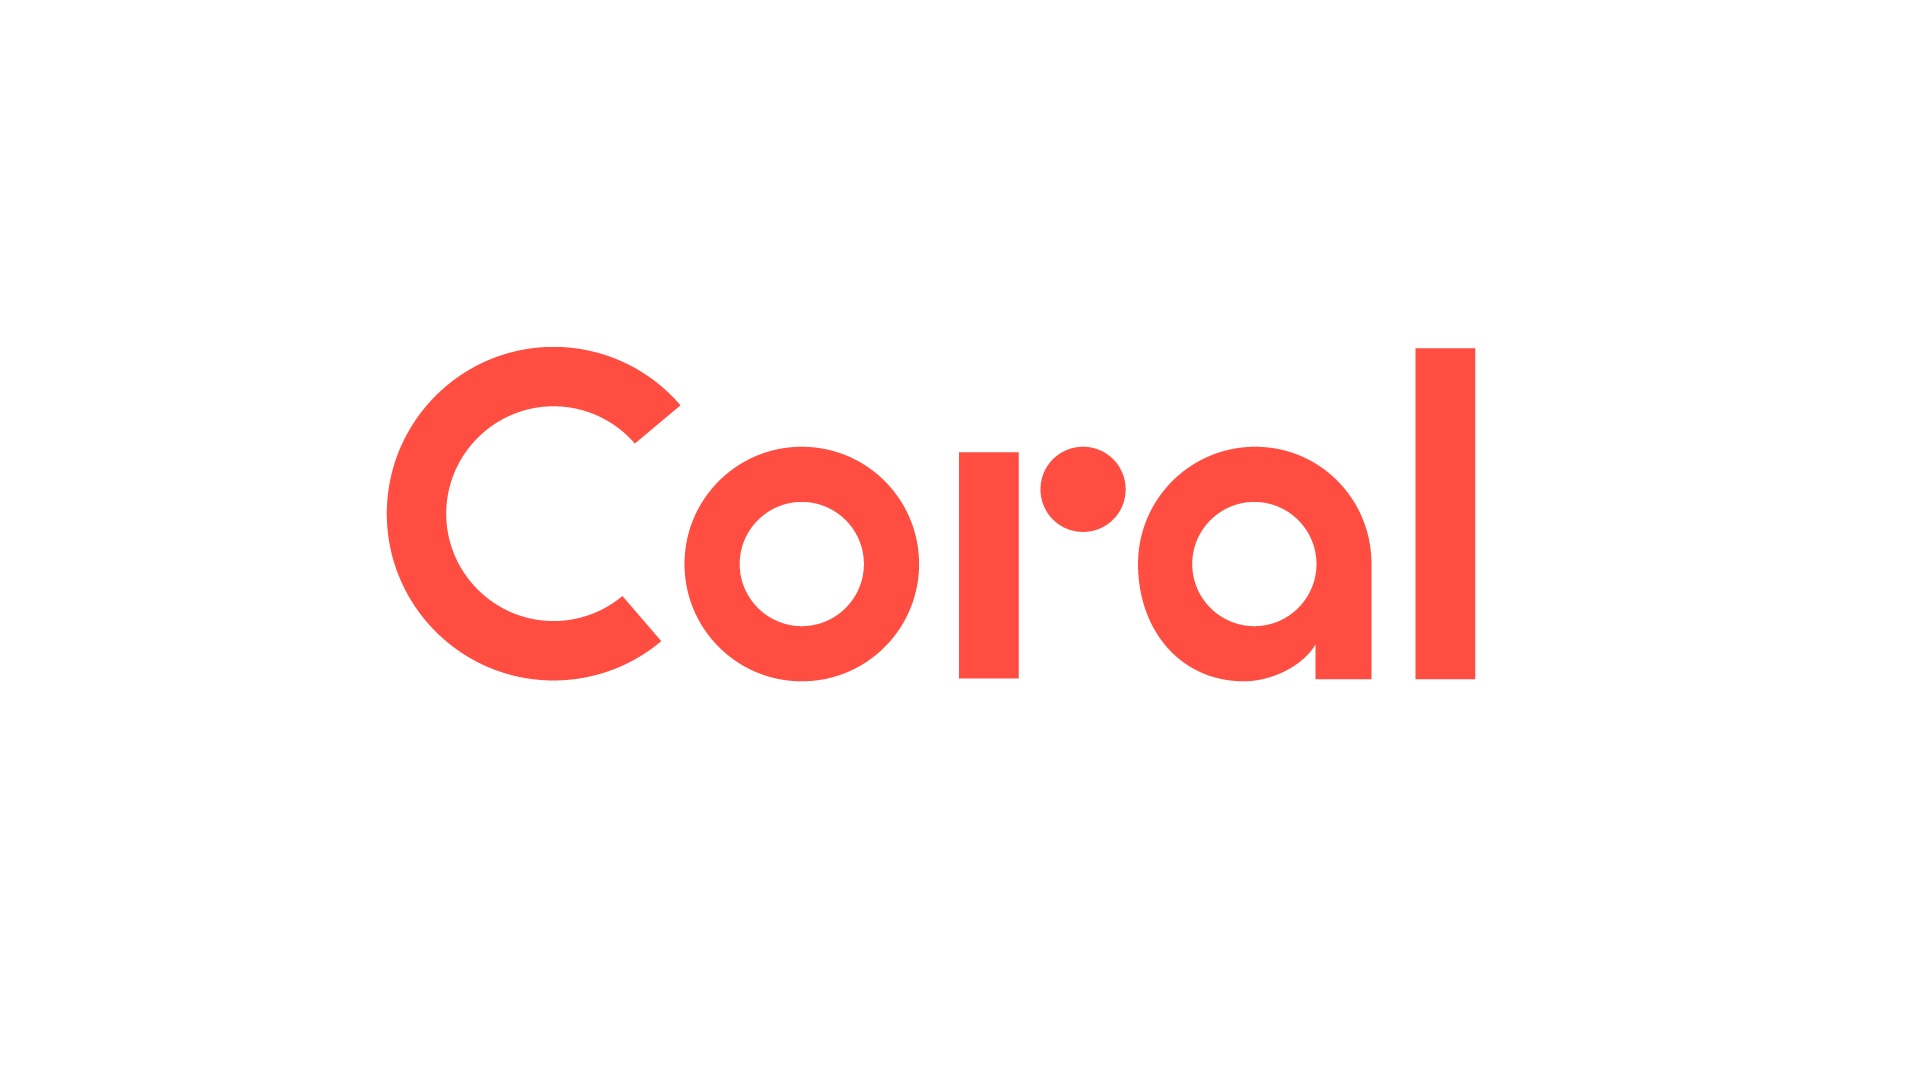 Coral Travel логотип. Логотип фирмы Coral. Корал логотип туроператор. Corall логотип вектор. Coral поиск